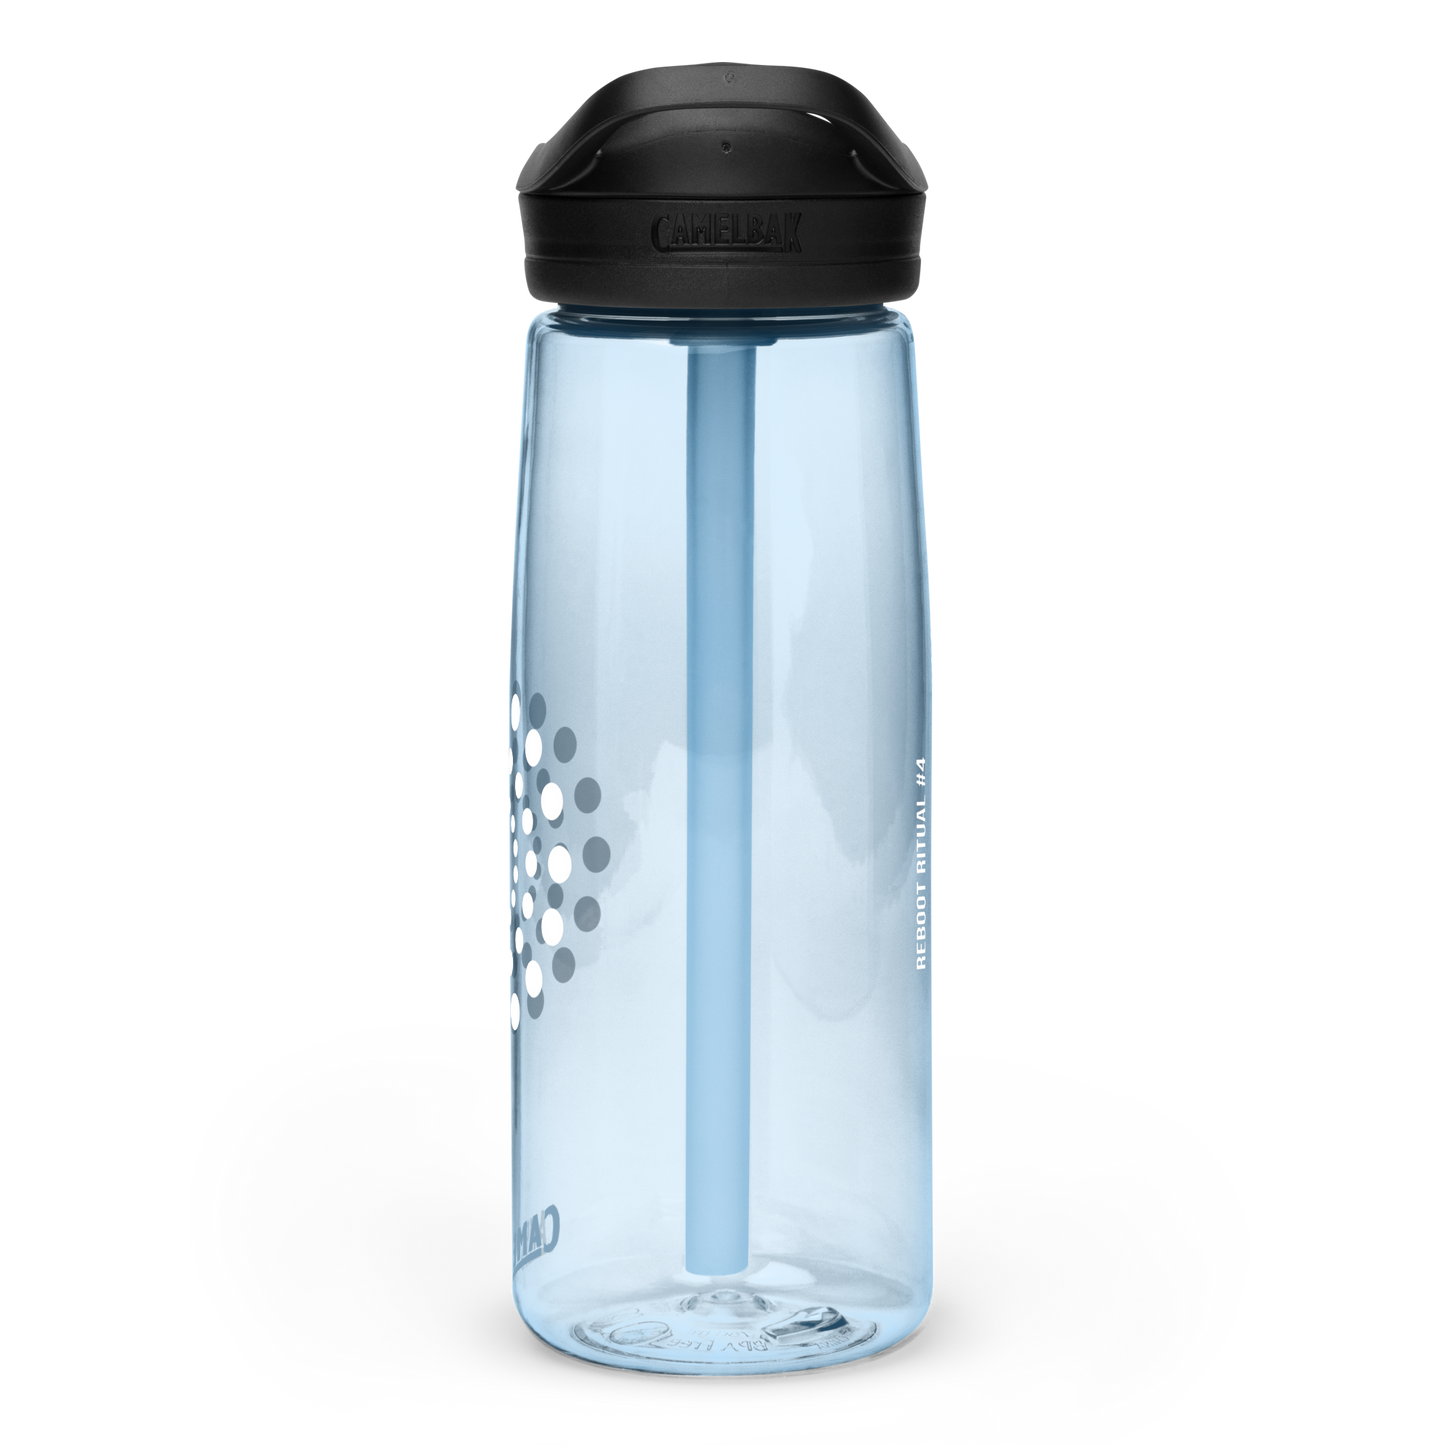 Reboot Rituals #4 - Sports water bottle